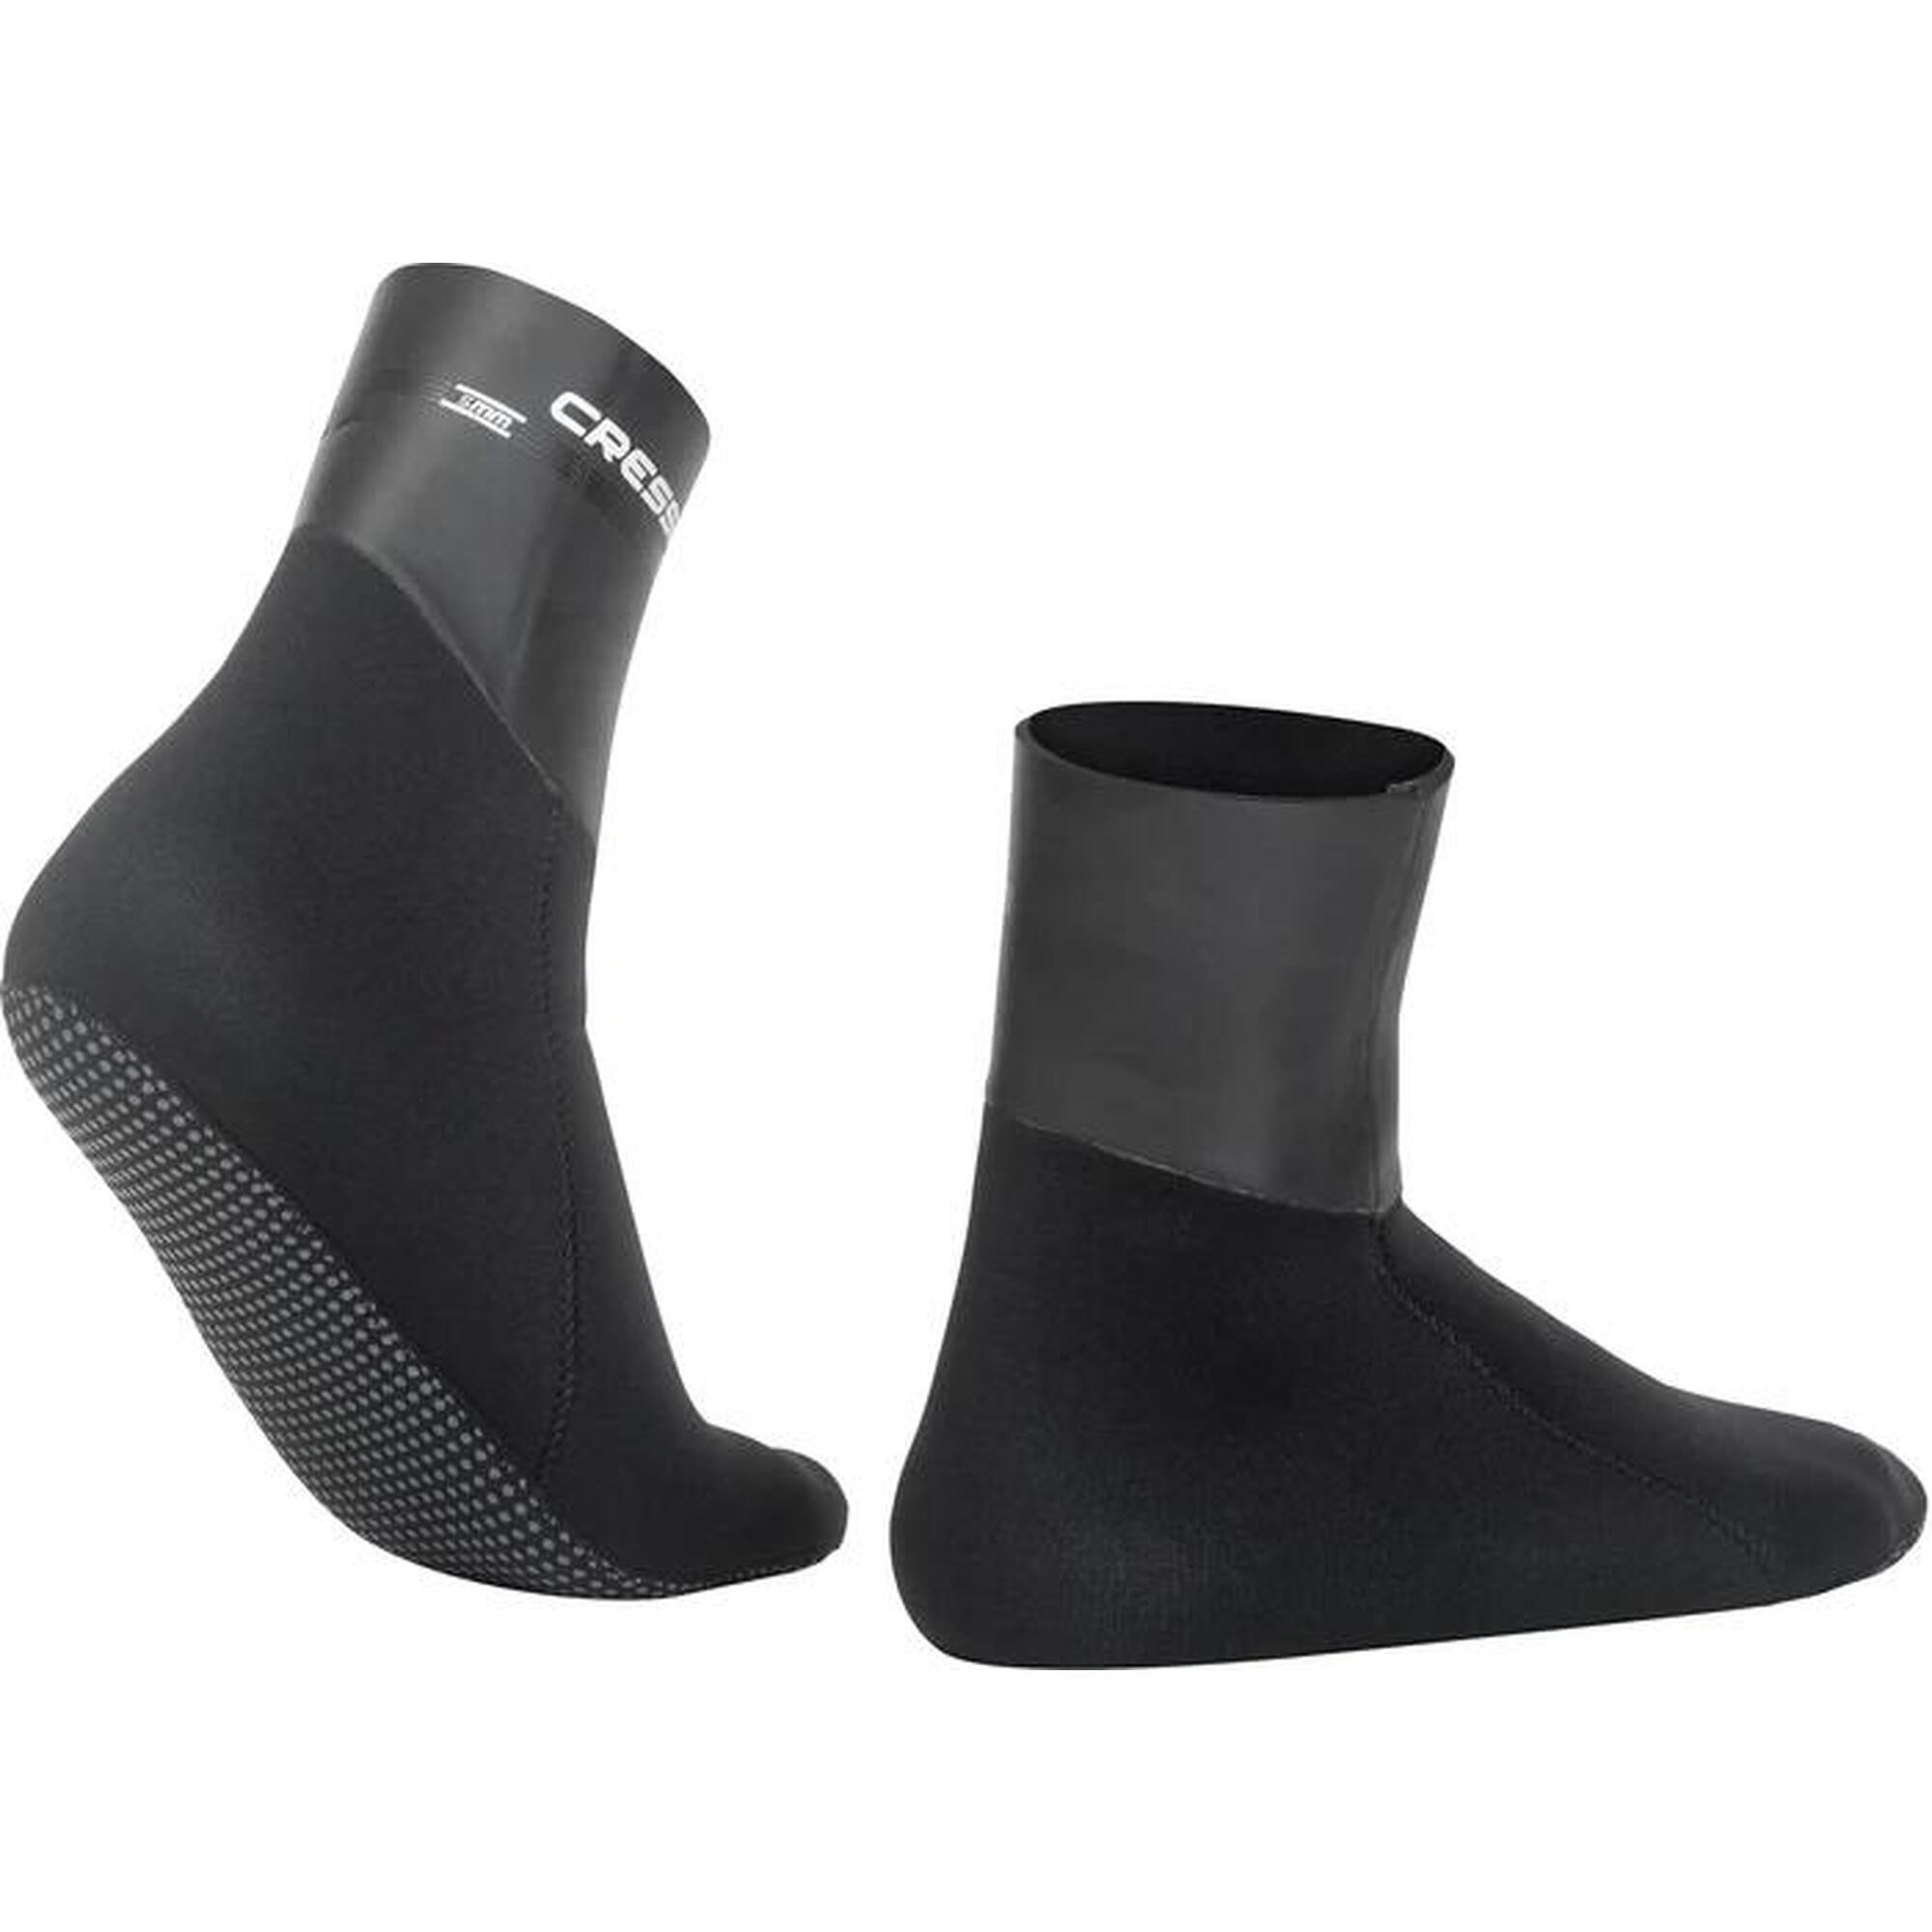 SARAGO 3MM Scuba-Diving Socks - Black